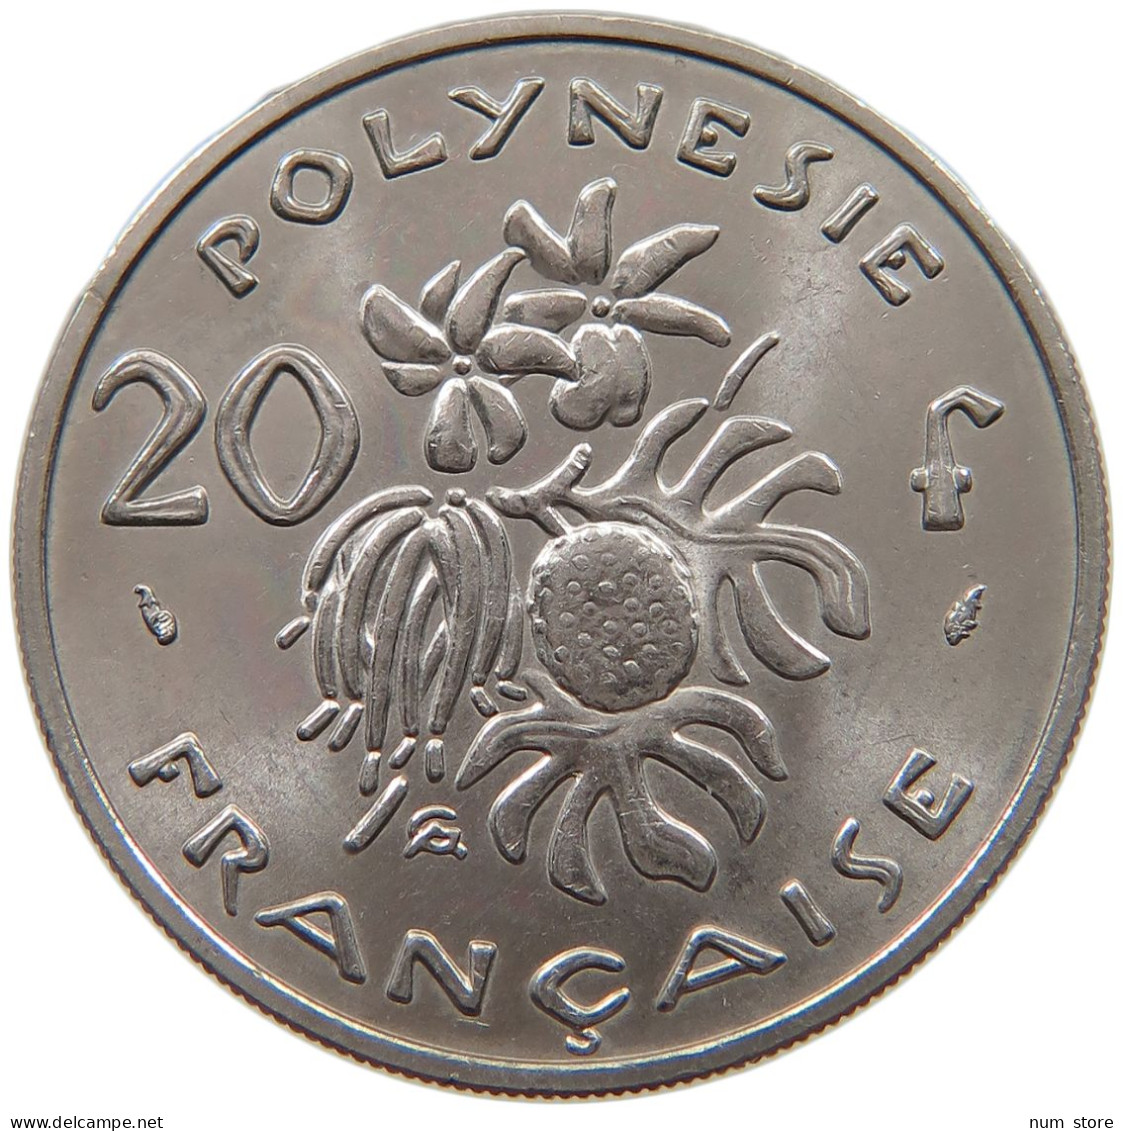 POLYNESIA 20 FRANCS 1977  #a053 0825 - Französisch-Polynesien